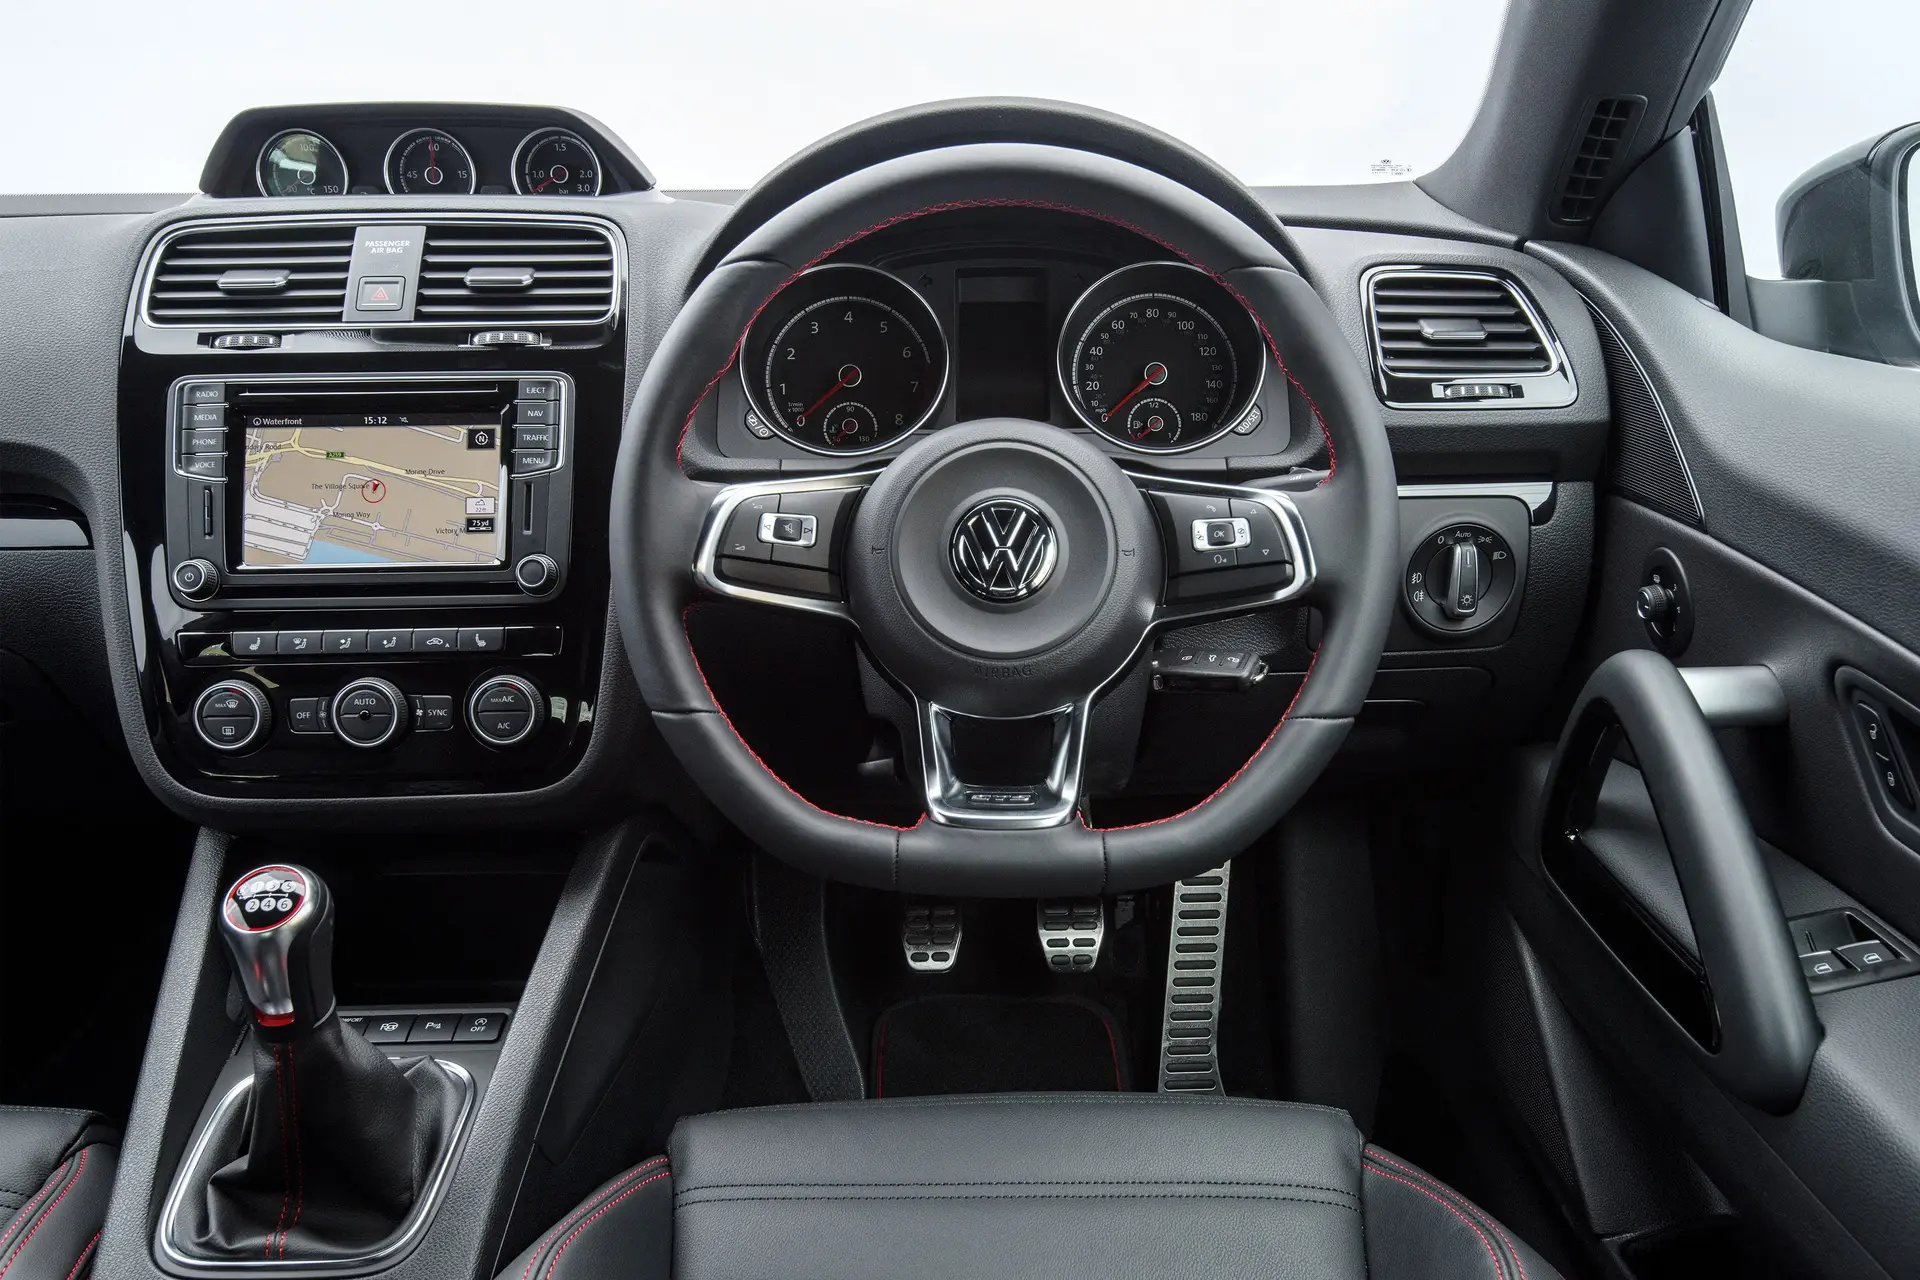 Volkswagen Scirocco (2008-2018) Review: interior close up photo of the Volkswagen Scirocco dashboard